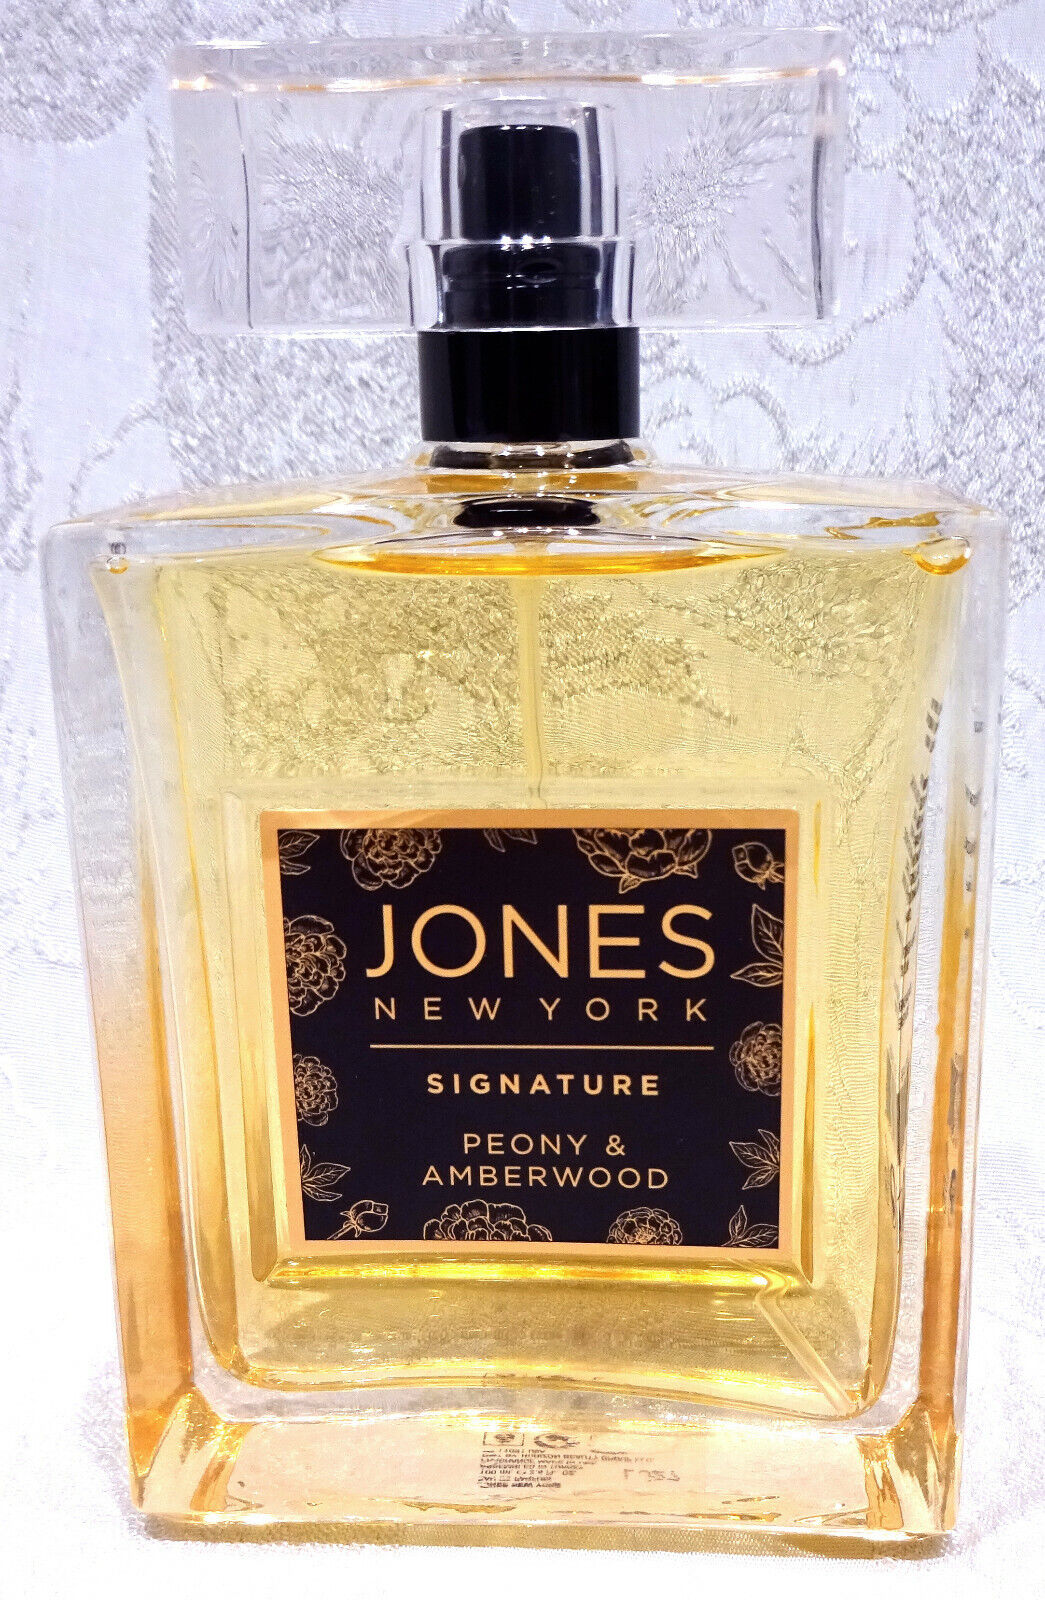 Jones New York Signature PEONY & AMBERWOOD Eau de Parfum 3.4 oz, No Box 